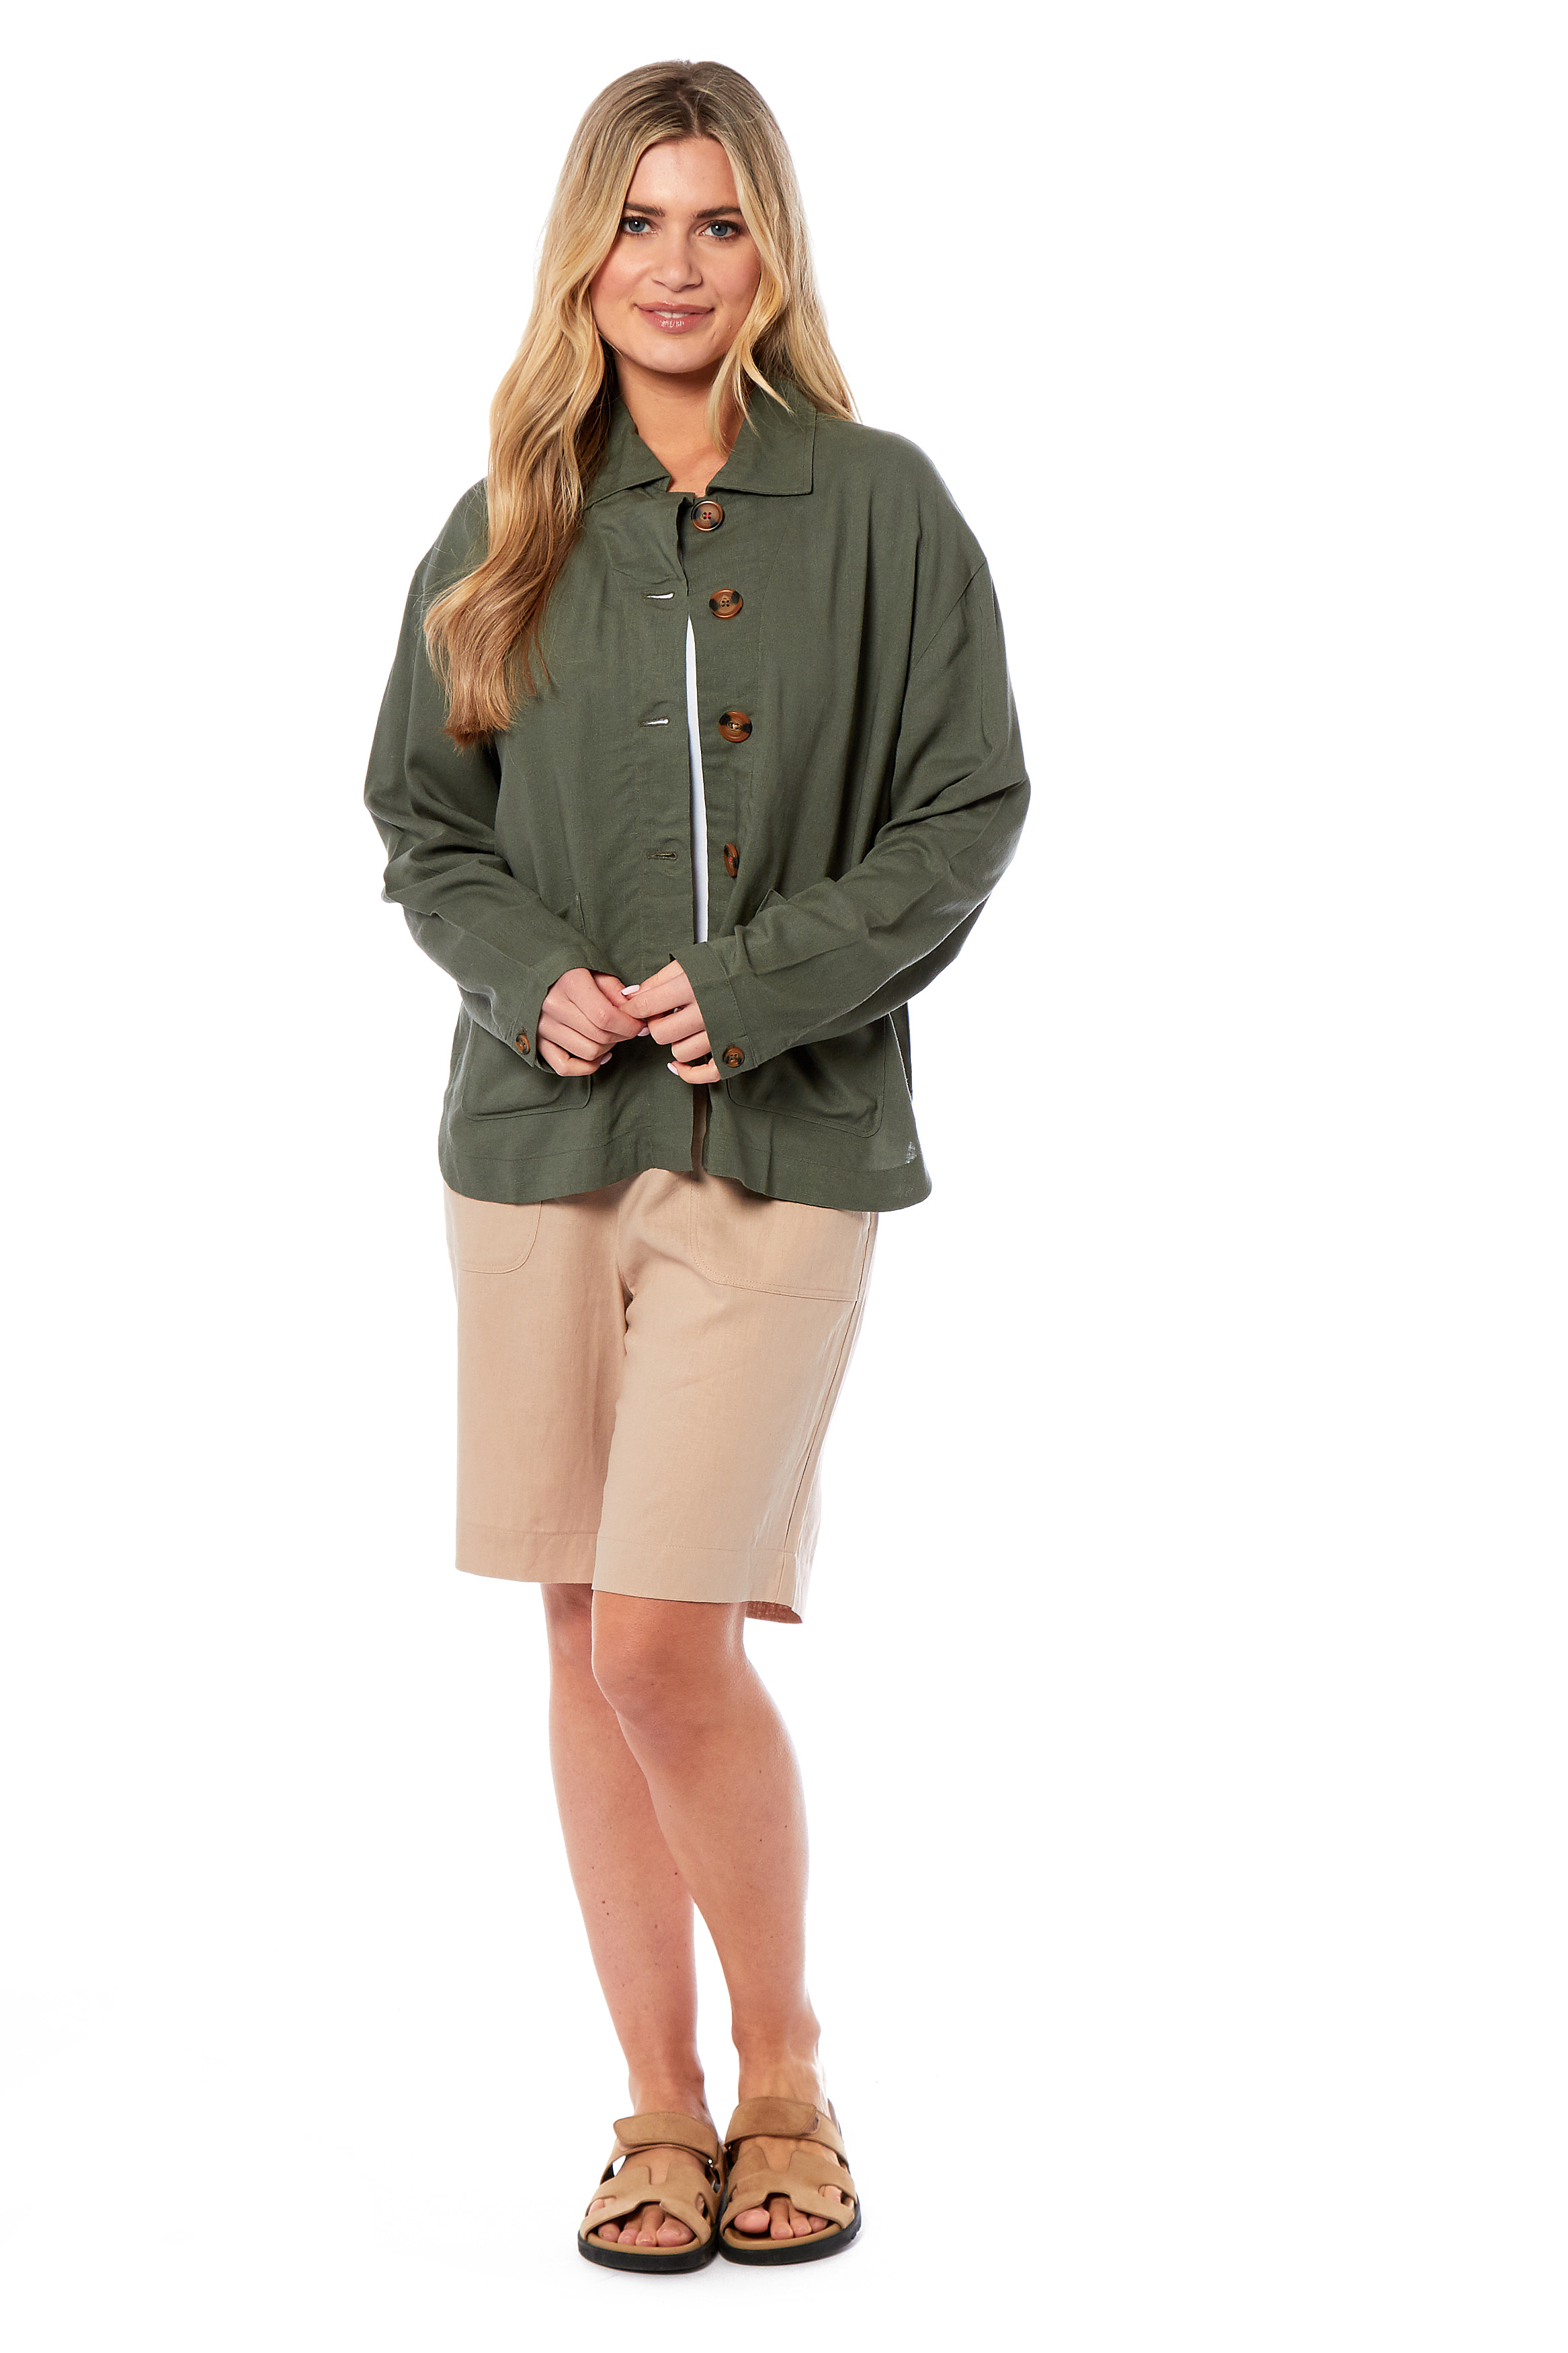 Charlotte West Ladies Linen Jacket (Size 10) - Khaki